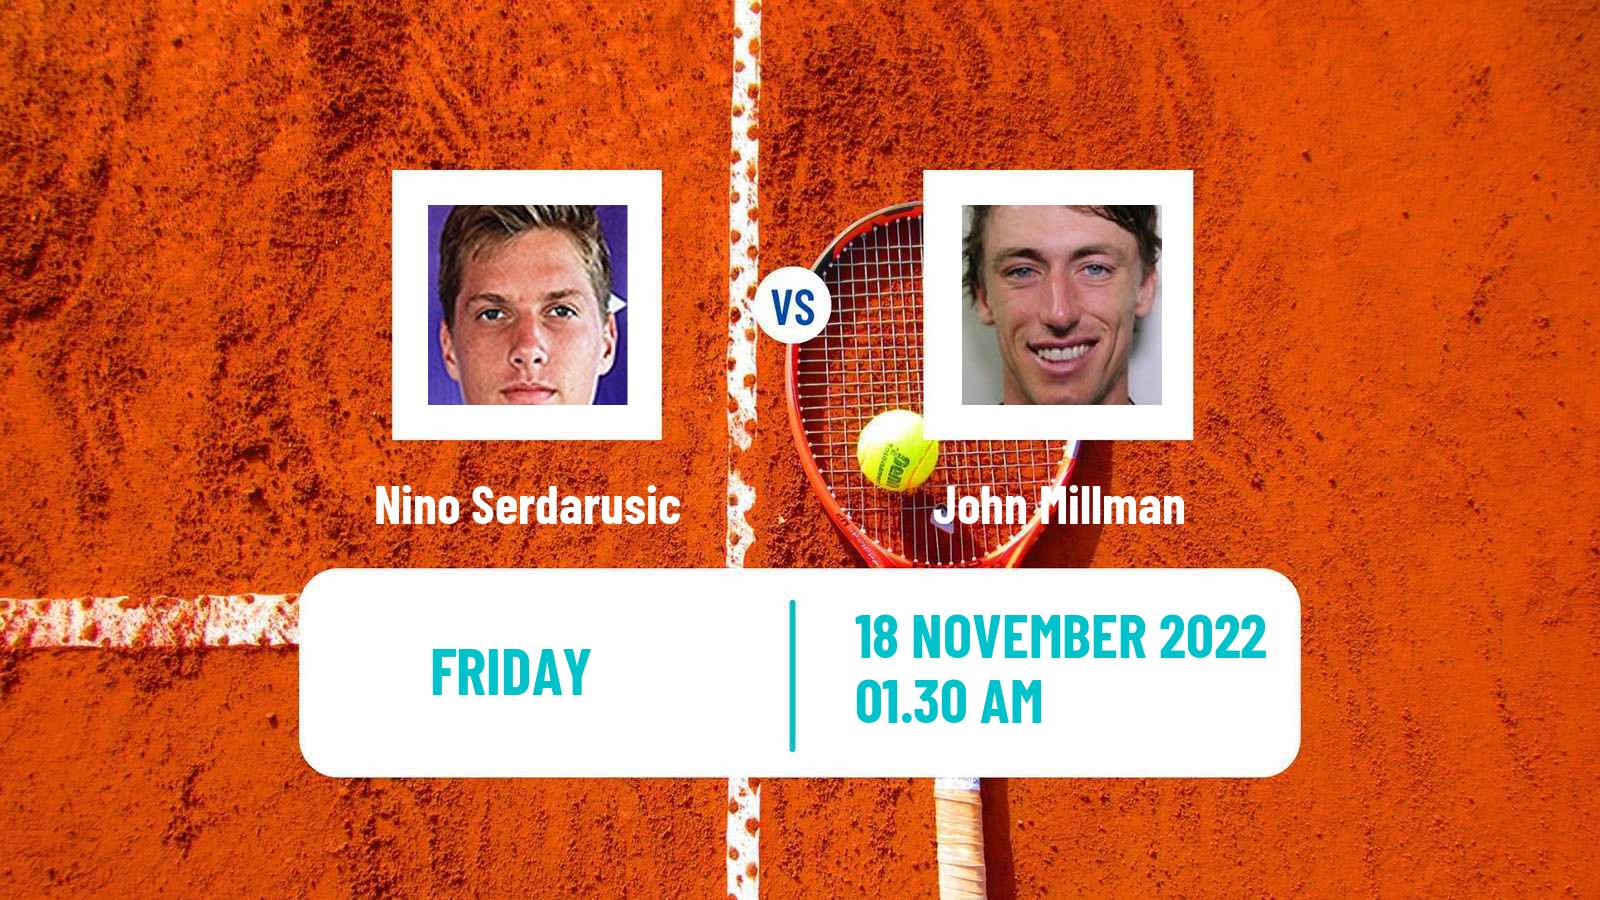 Tennis ATP Challenger Nino Serdarusic - John Millman